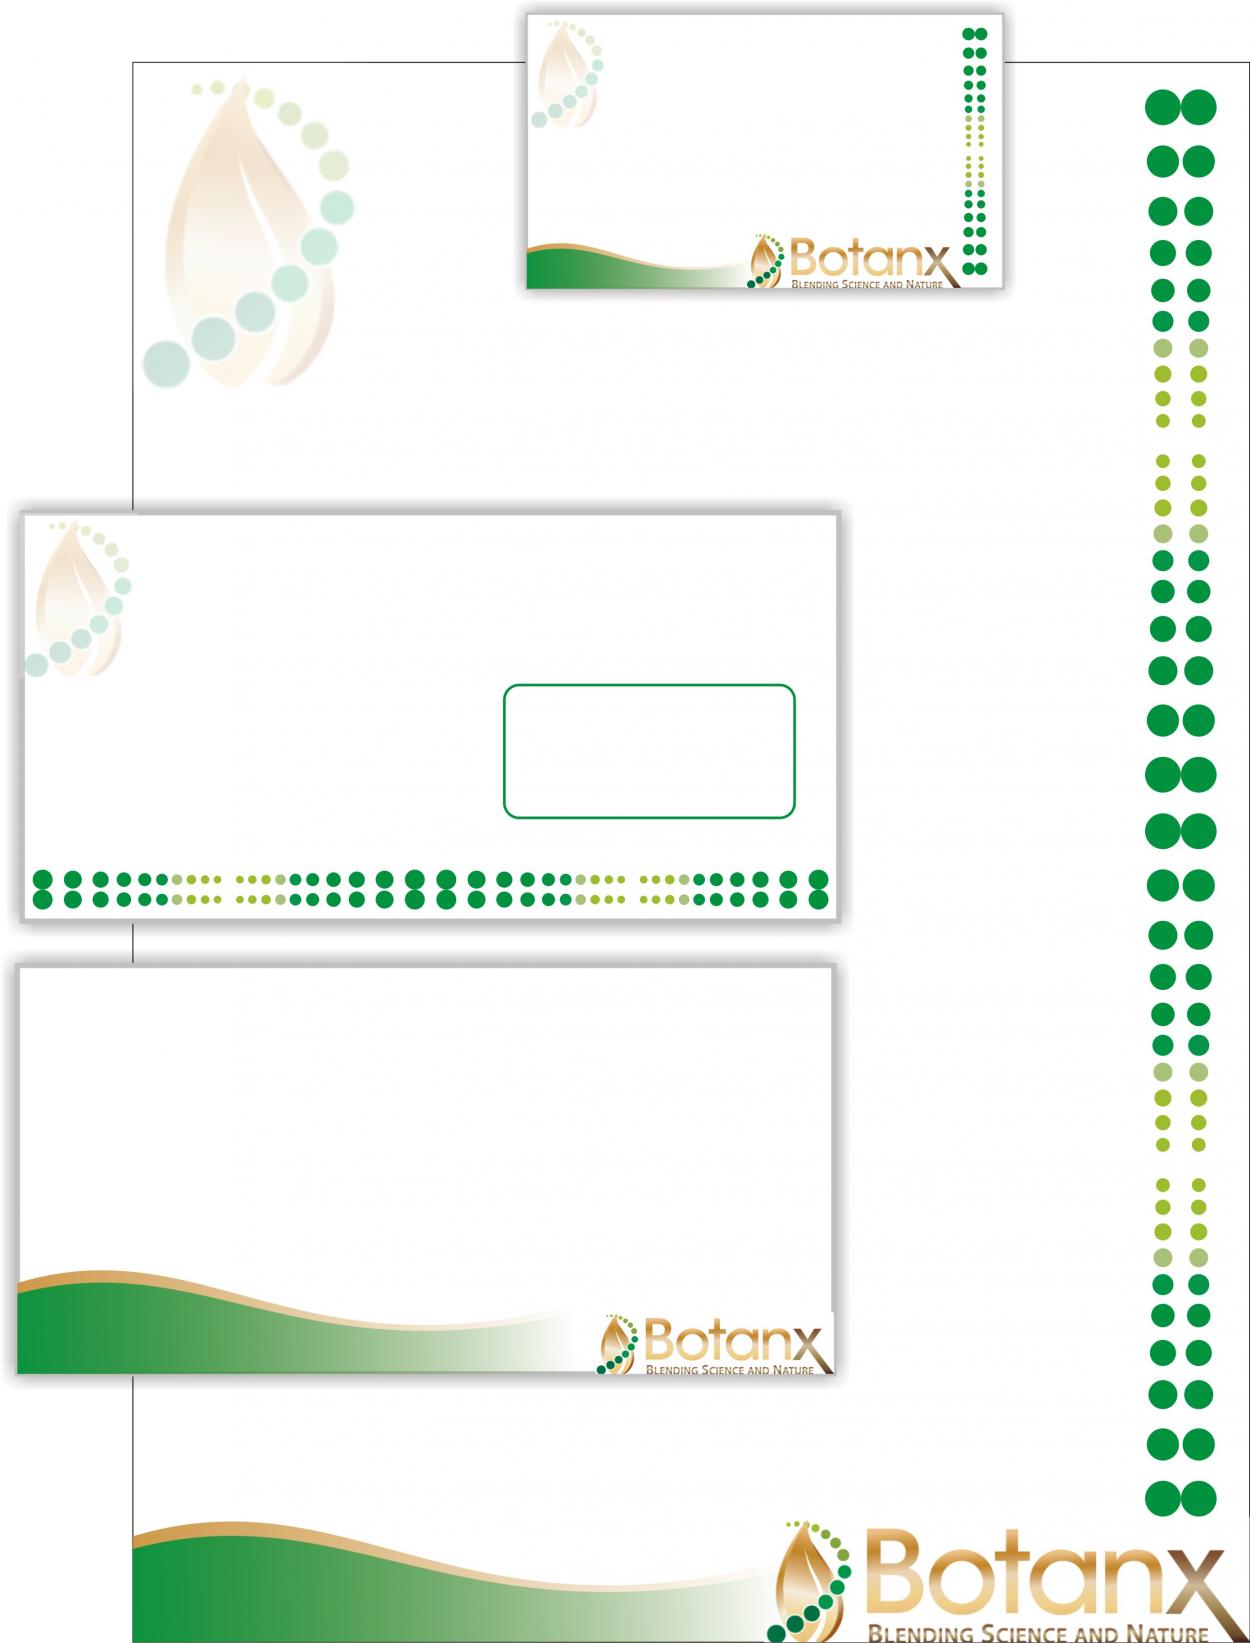 Business Card & Stationery Design entry 226369 submitted by masgantengheu to the Business Card & Stationery Design for Botanx, LLC run by botanxllc